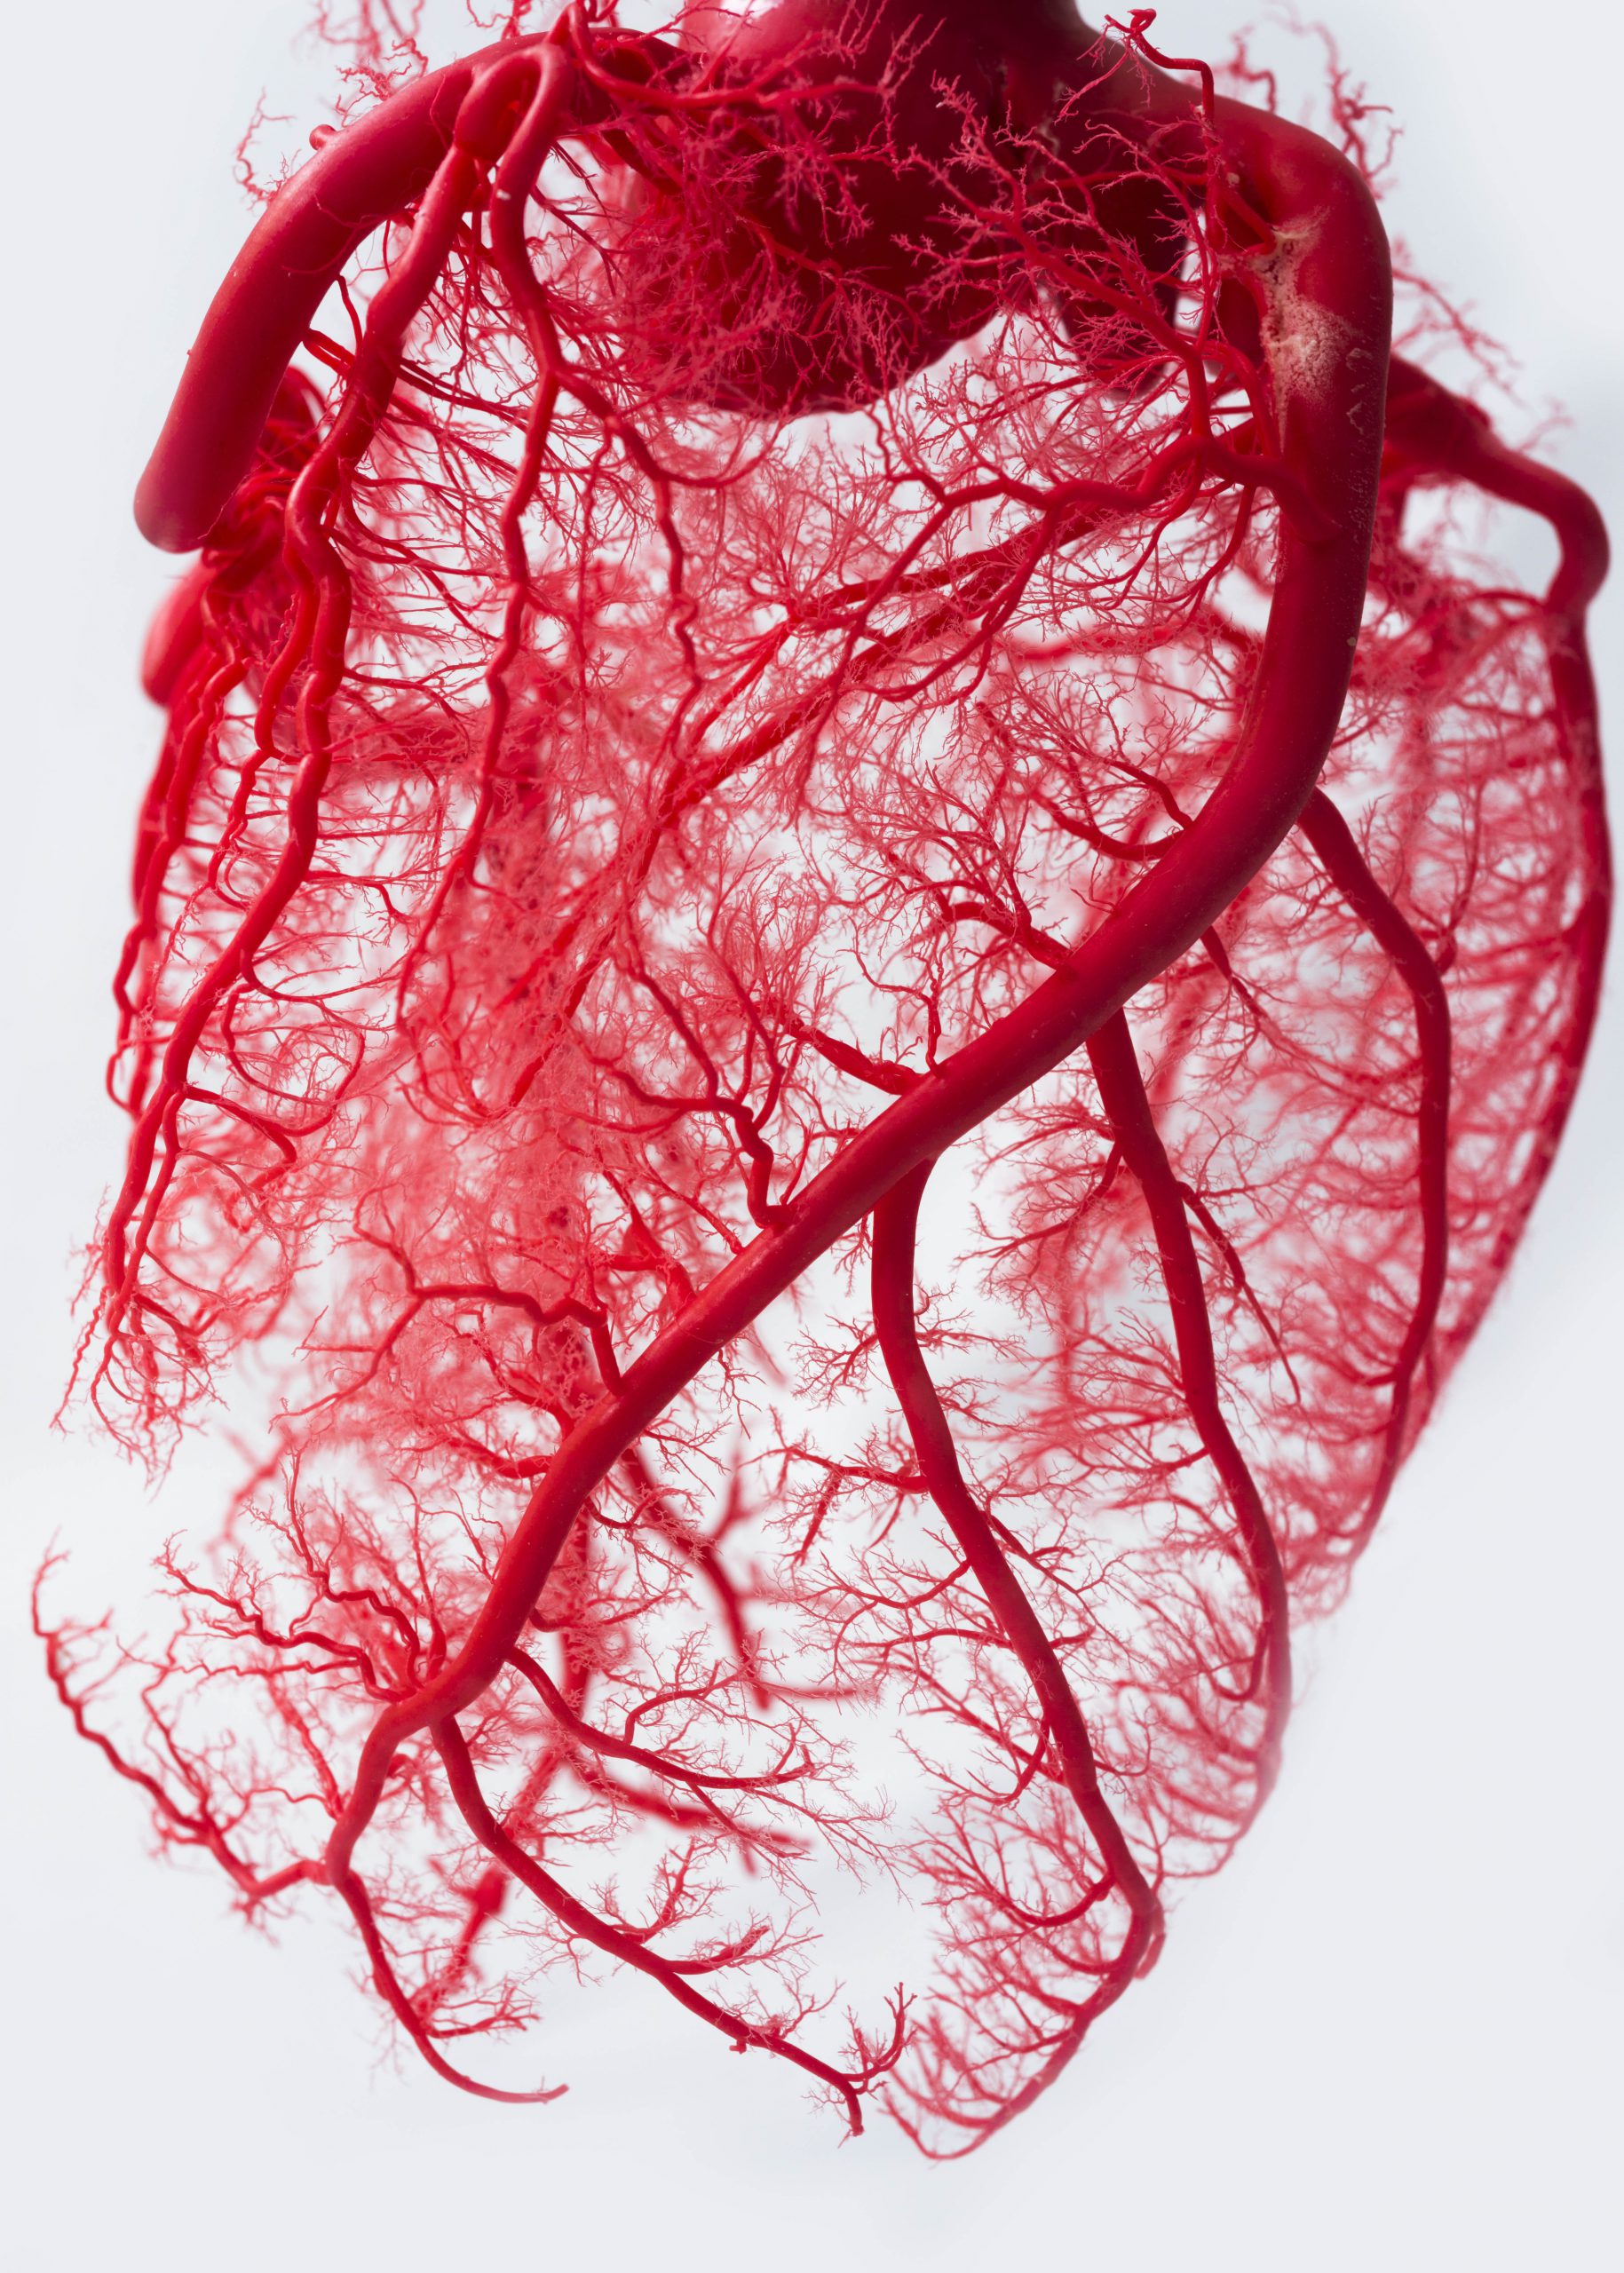 Fractal Human Heart Vascular System